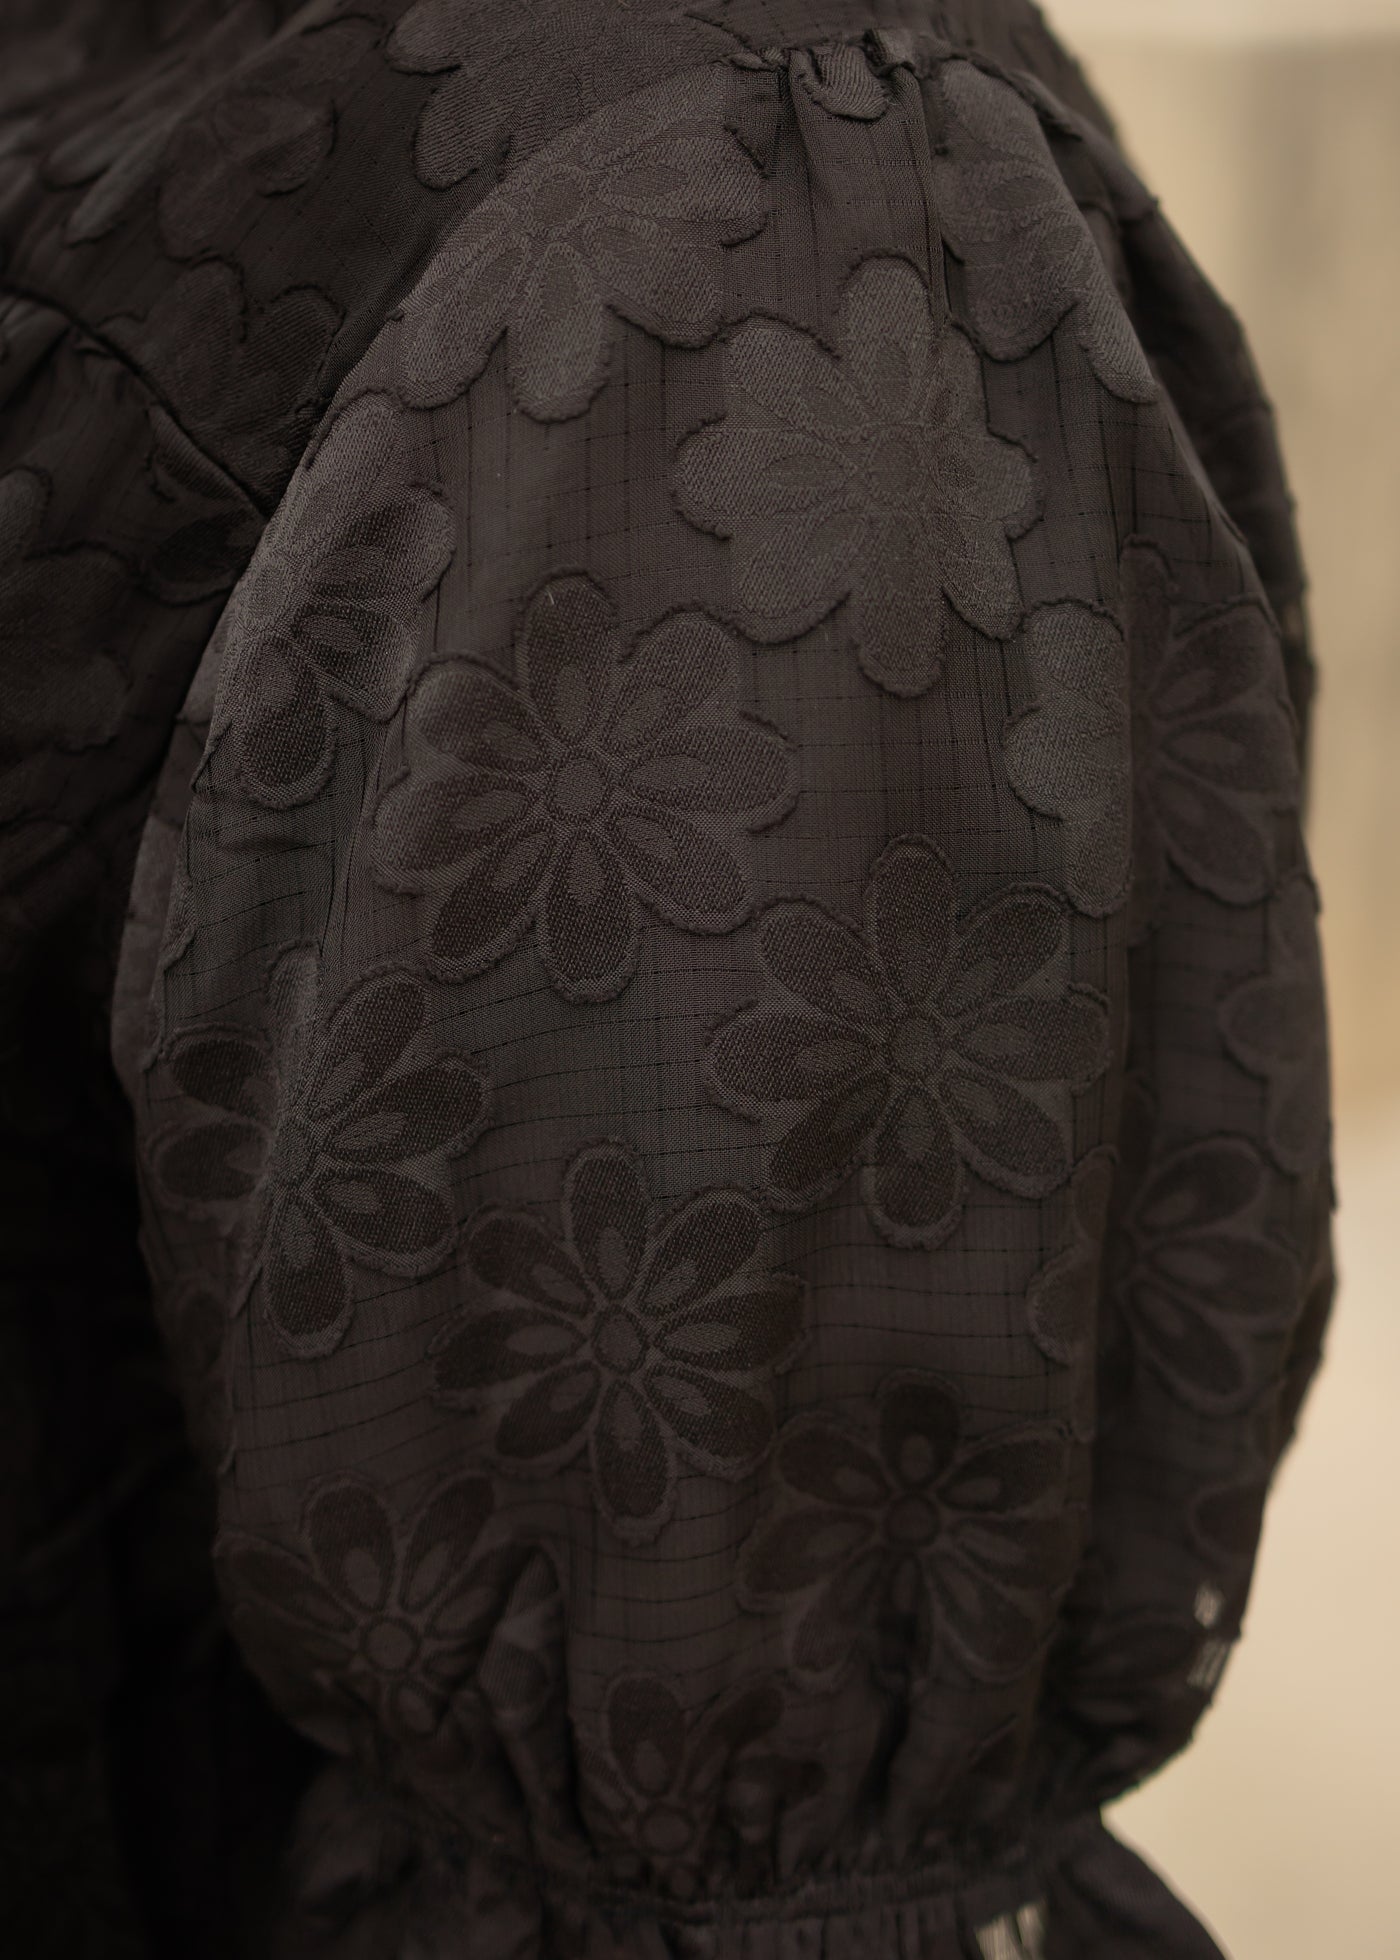 Floral pattern on a black dress